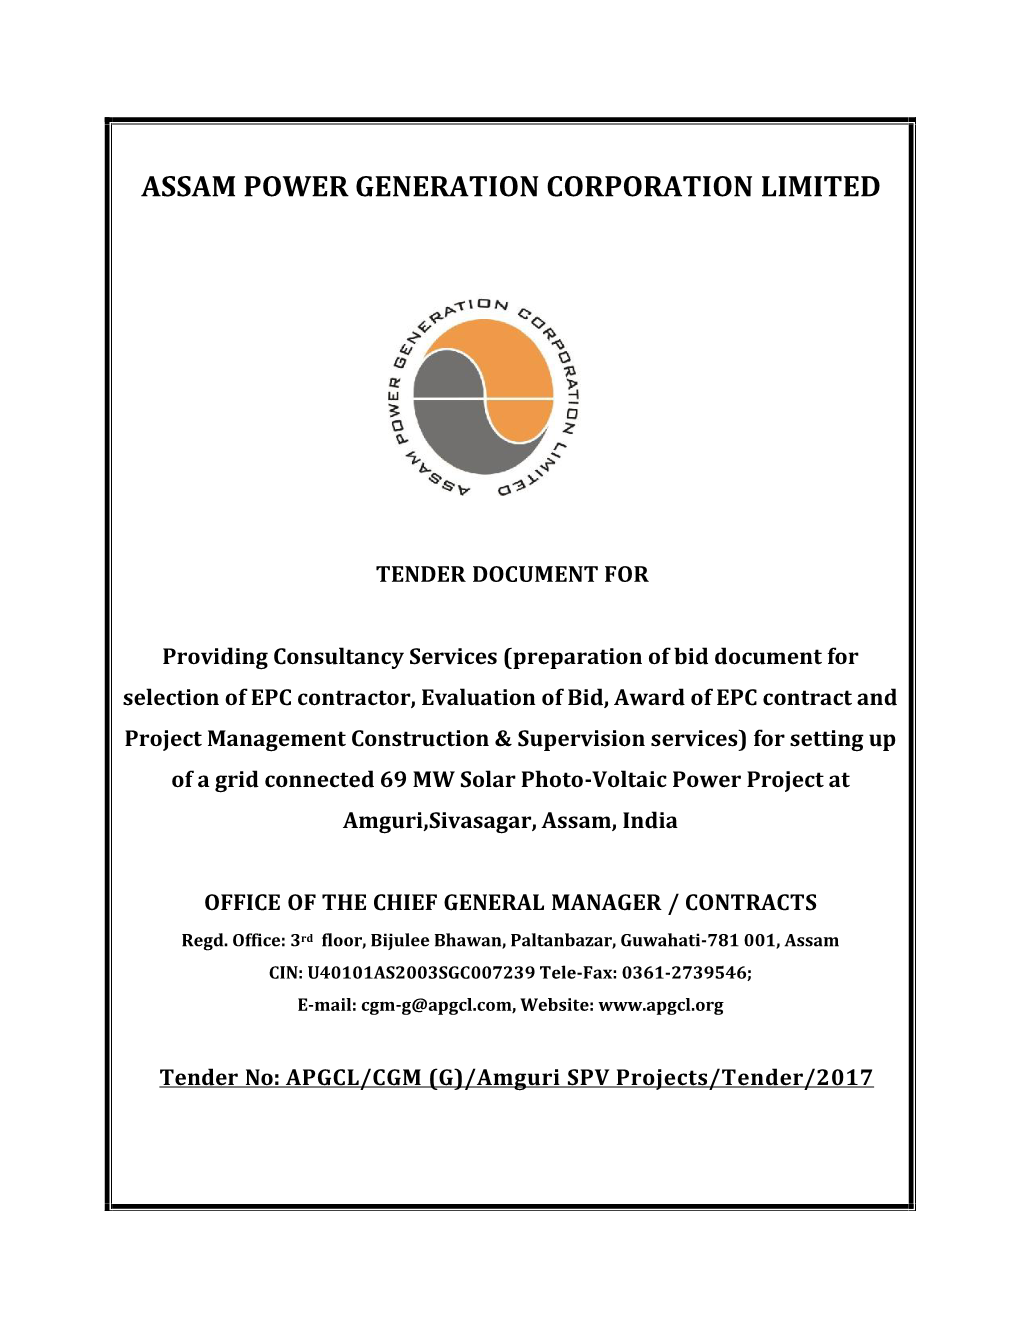 Assam Power Generation Corporation Limited